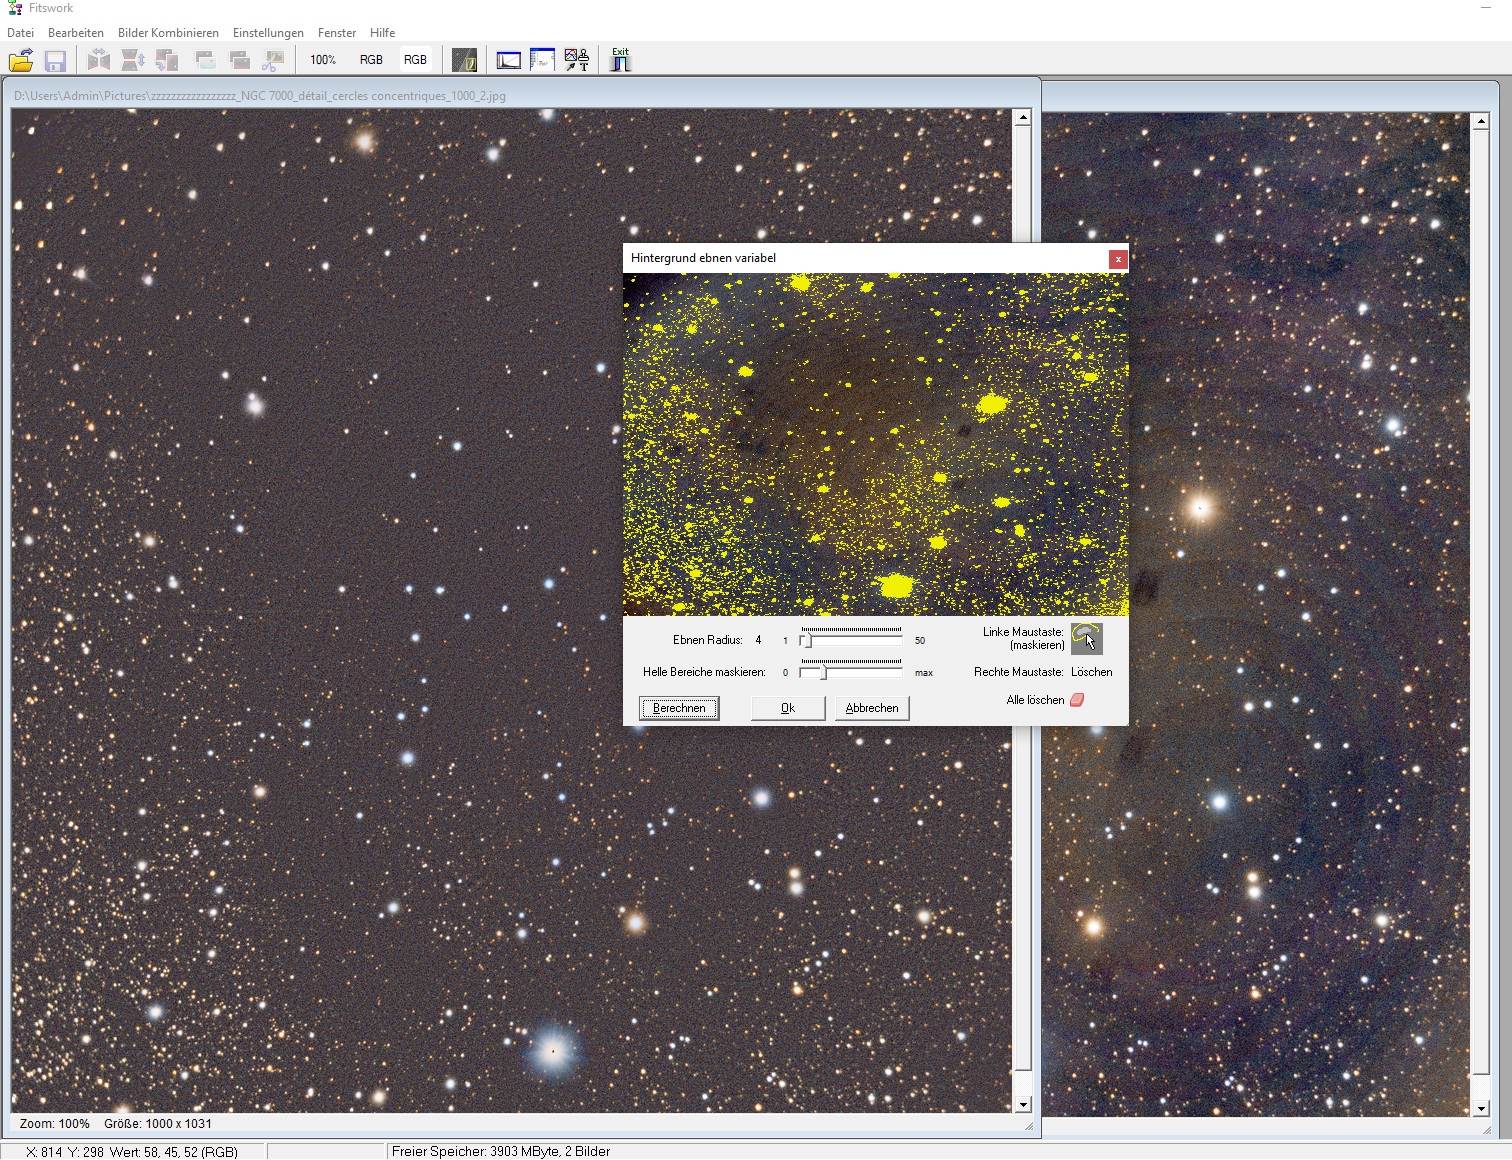 616168a711514_zzzzzzzzzzzzzzzzz_NGC7000_dtail_cerclesconcentriques_traitementFitswork.jpg.a82dd2f4749d22ac7a3109c6c35d7573.jpg